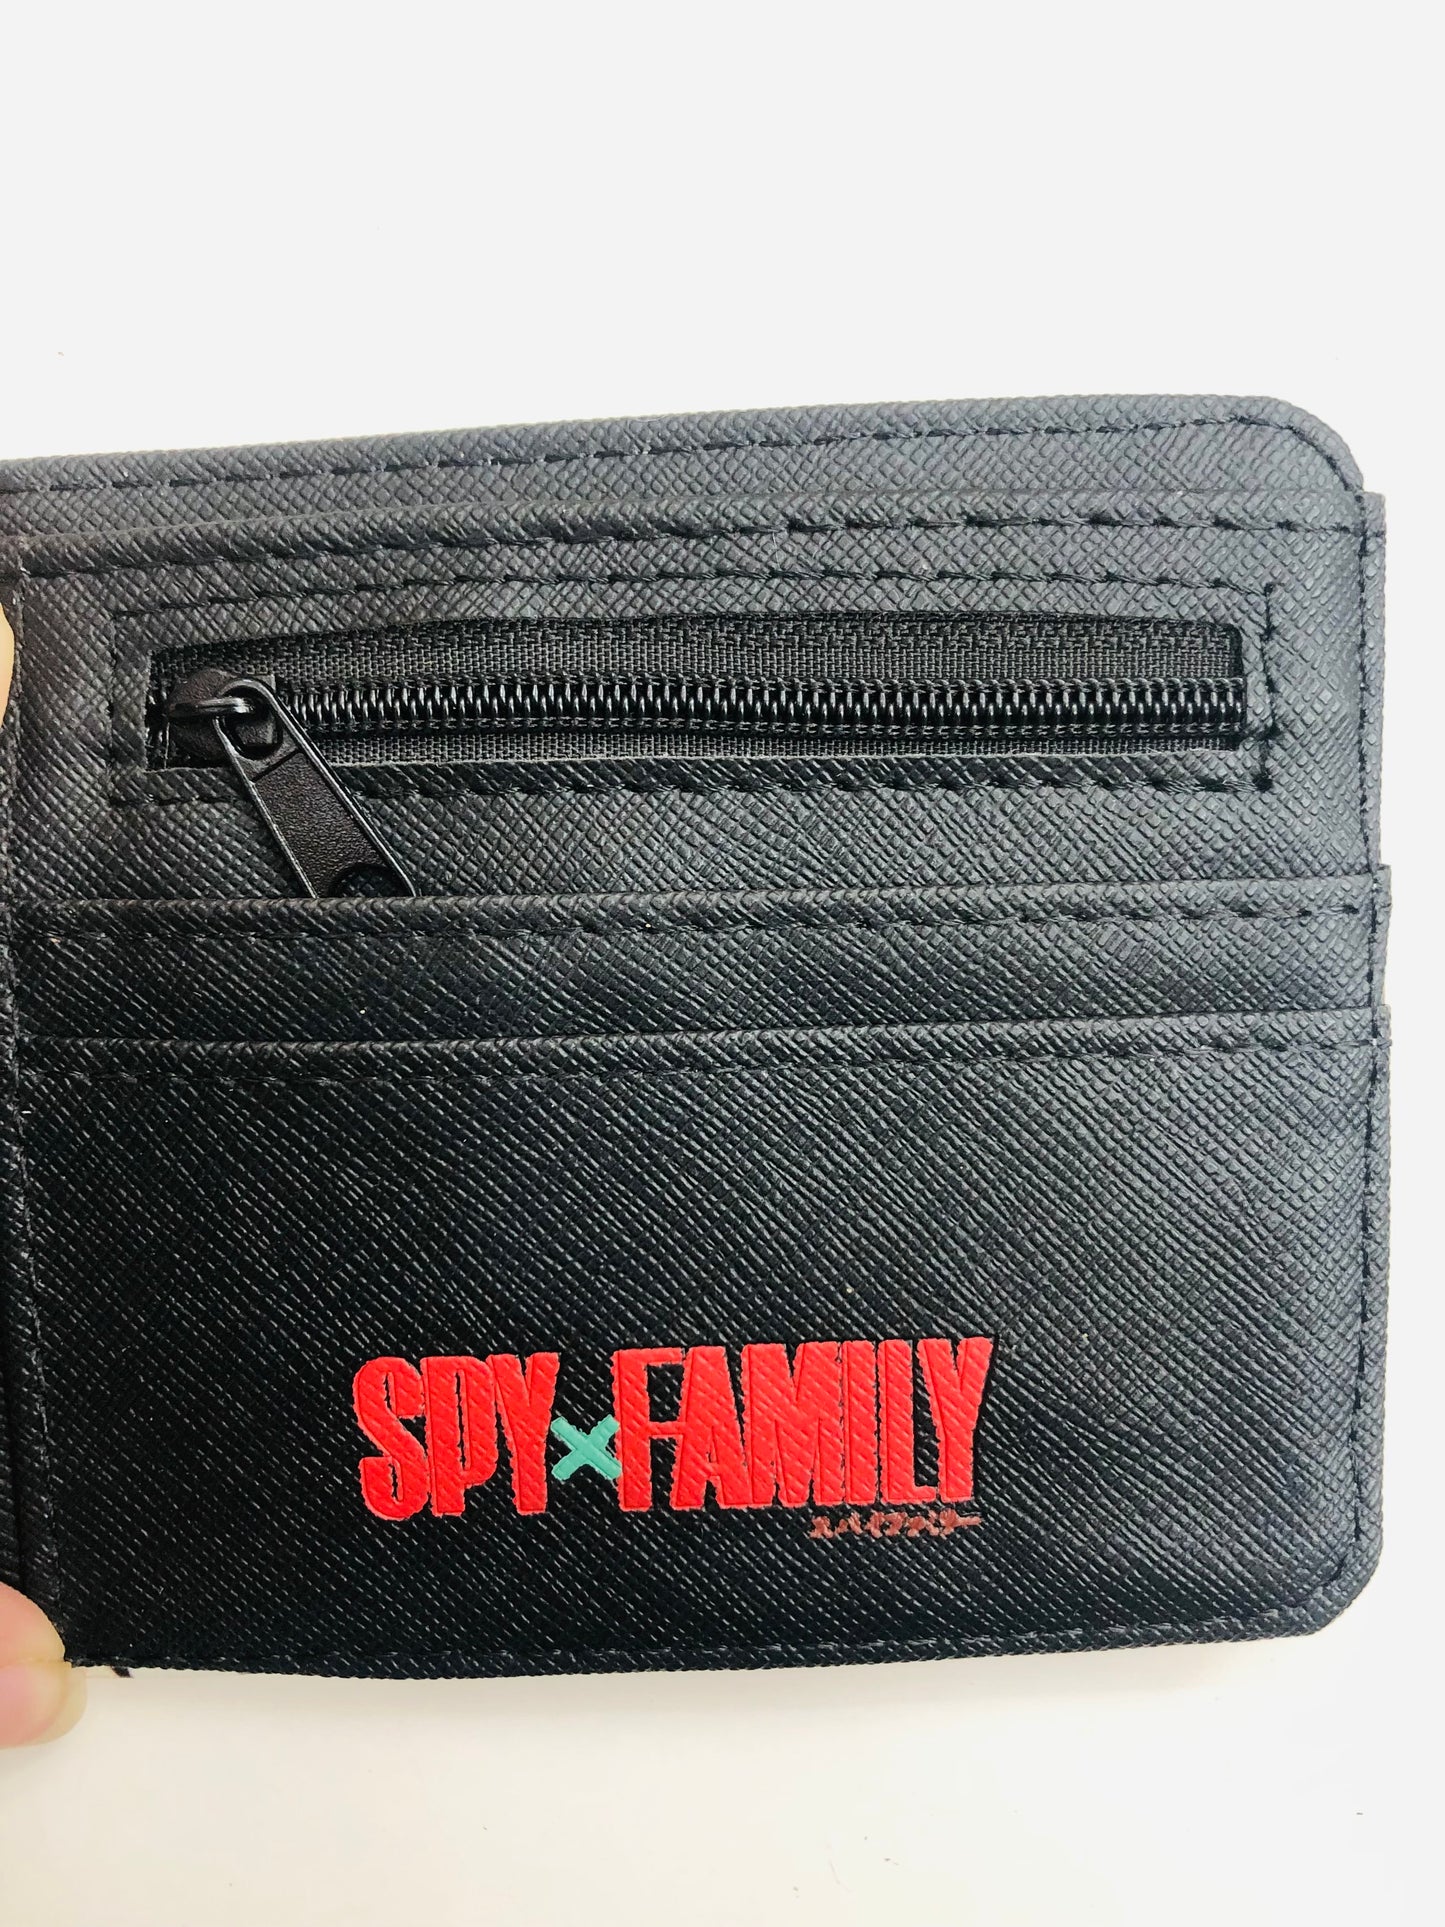 SpyxFamily Wallet